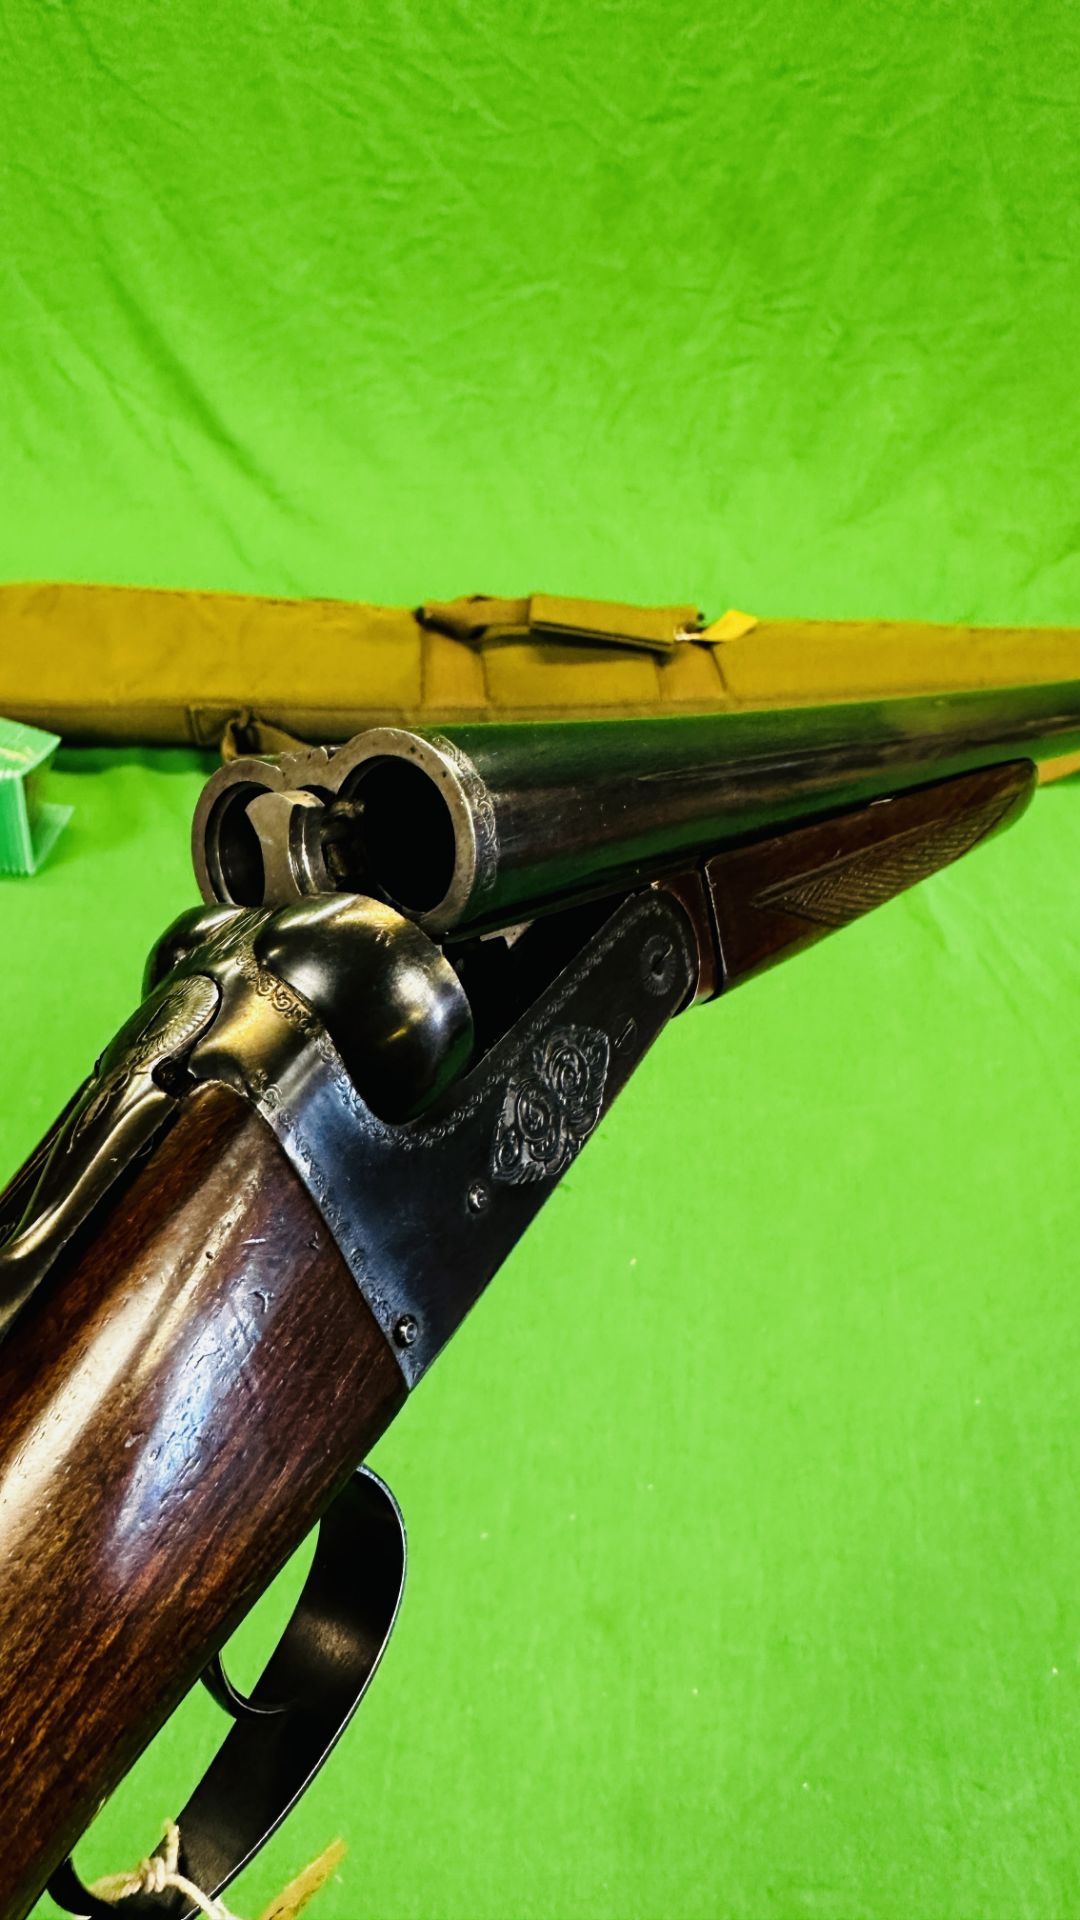 ZABALA 12 GAUGE SIDE BY SIDE SHOTGUN #192092 WITH GREEN PADDED GUN SLEEVE - (REF: 1452) - (ALL GUNS - Image 7 of 16